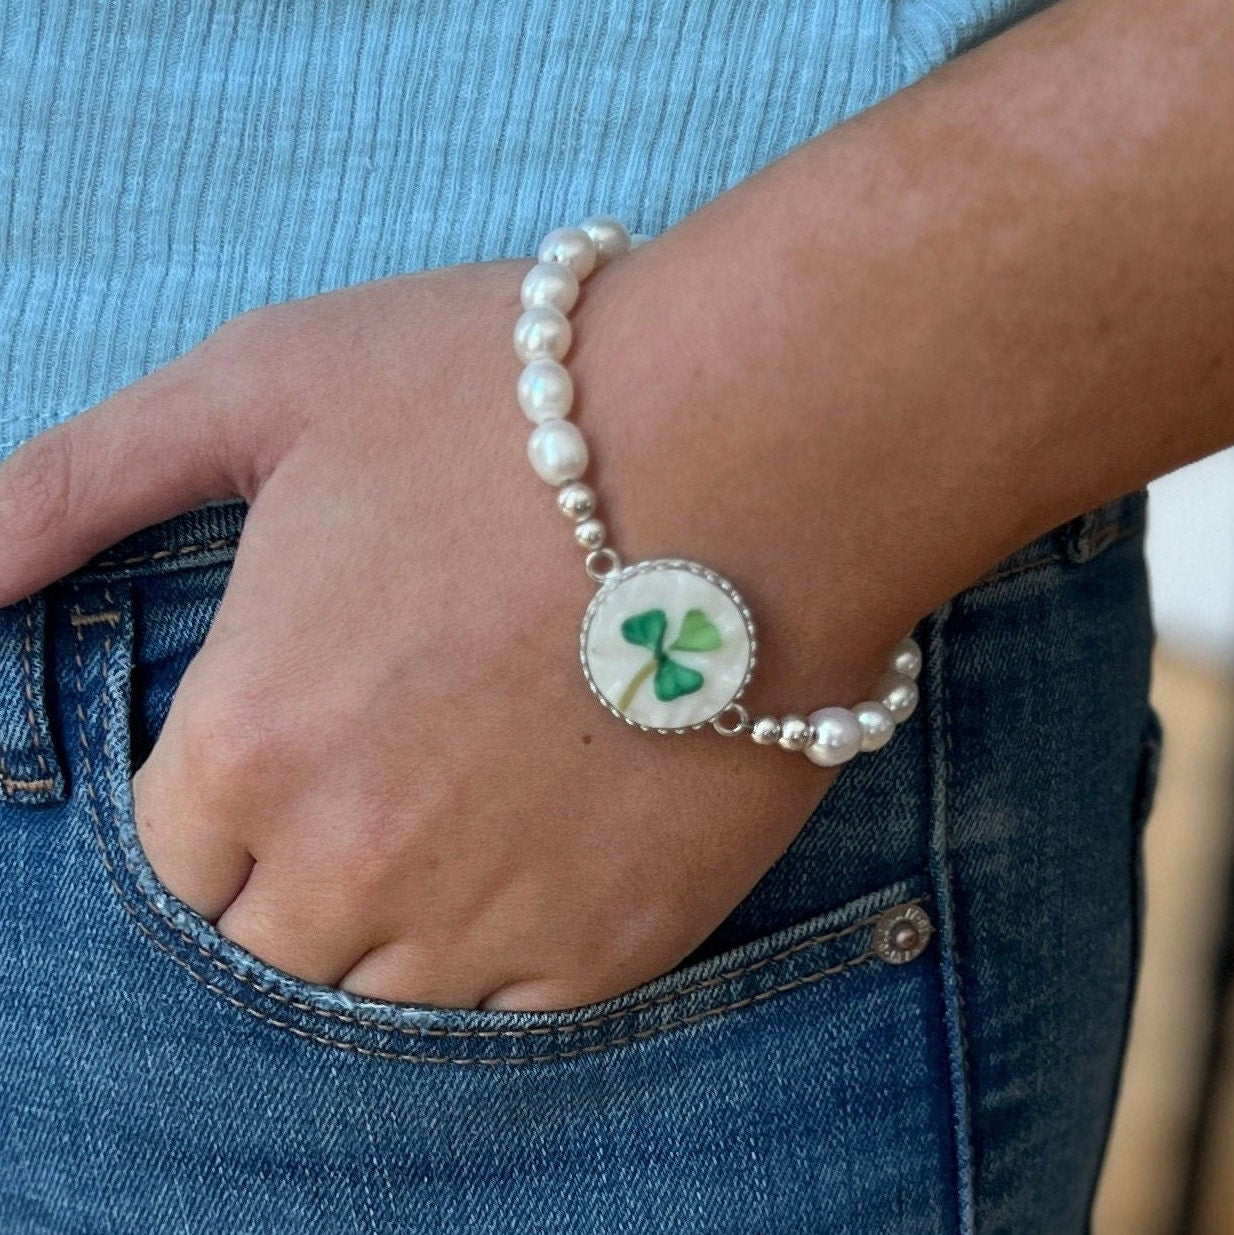 Irish Belleek China, Freshwater Pearl Bracelet, Broken China Jewelry, Unique Handmade Gifts for Women